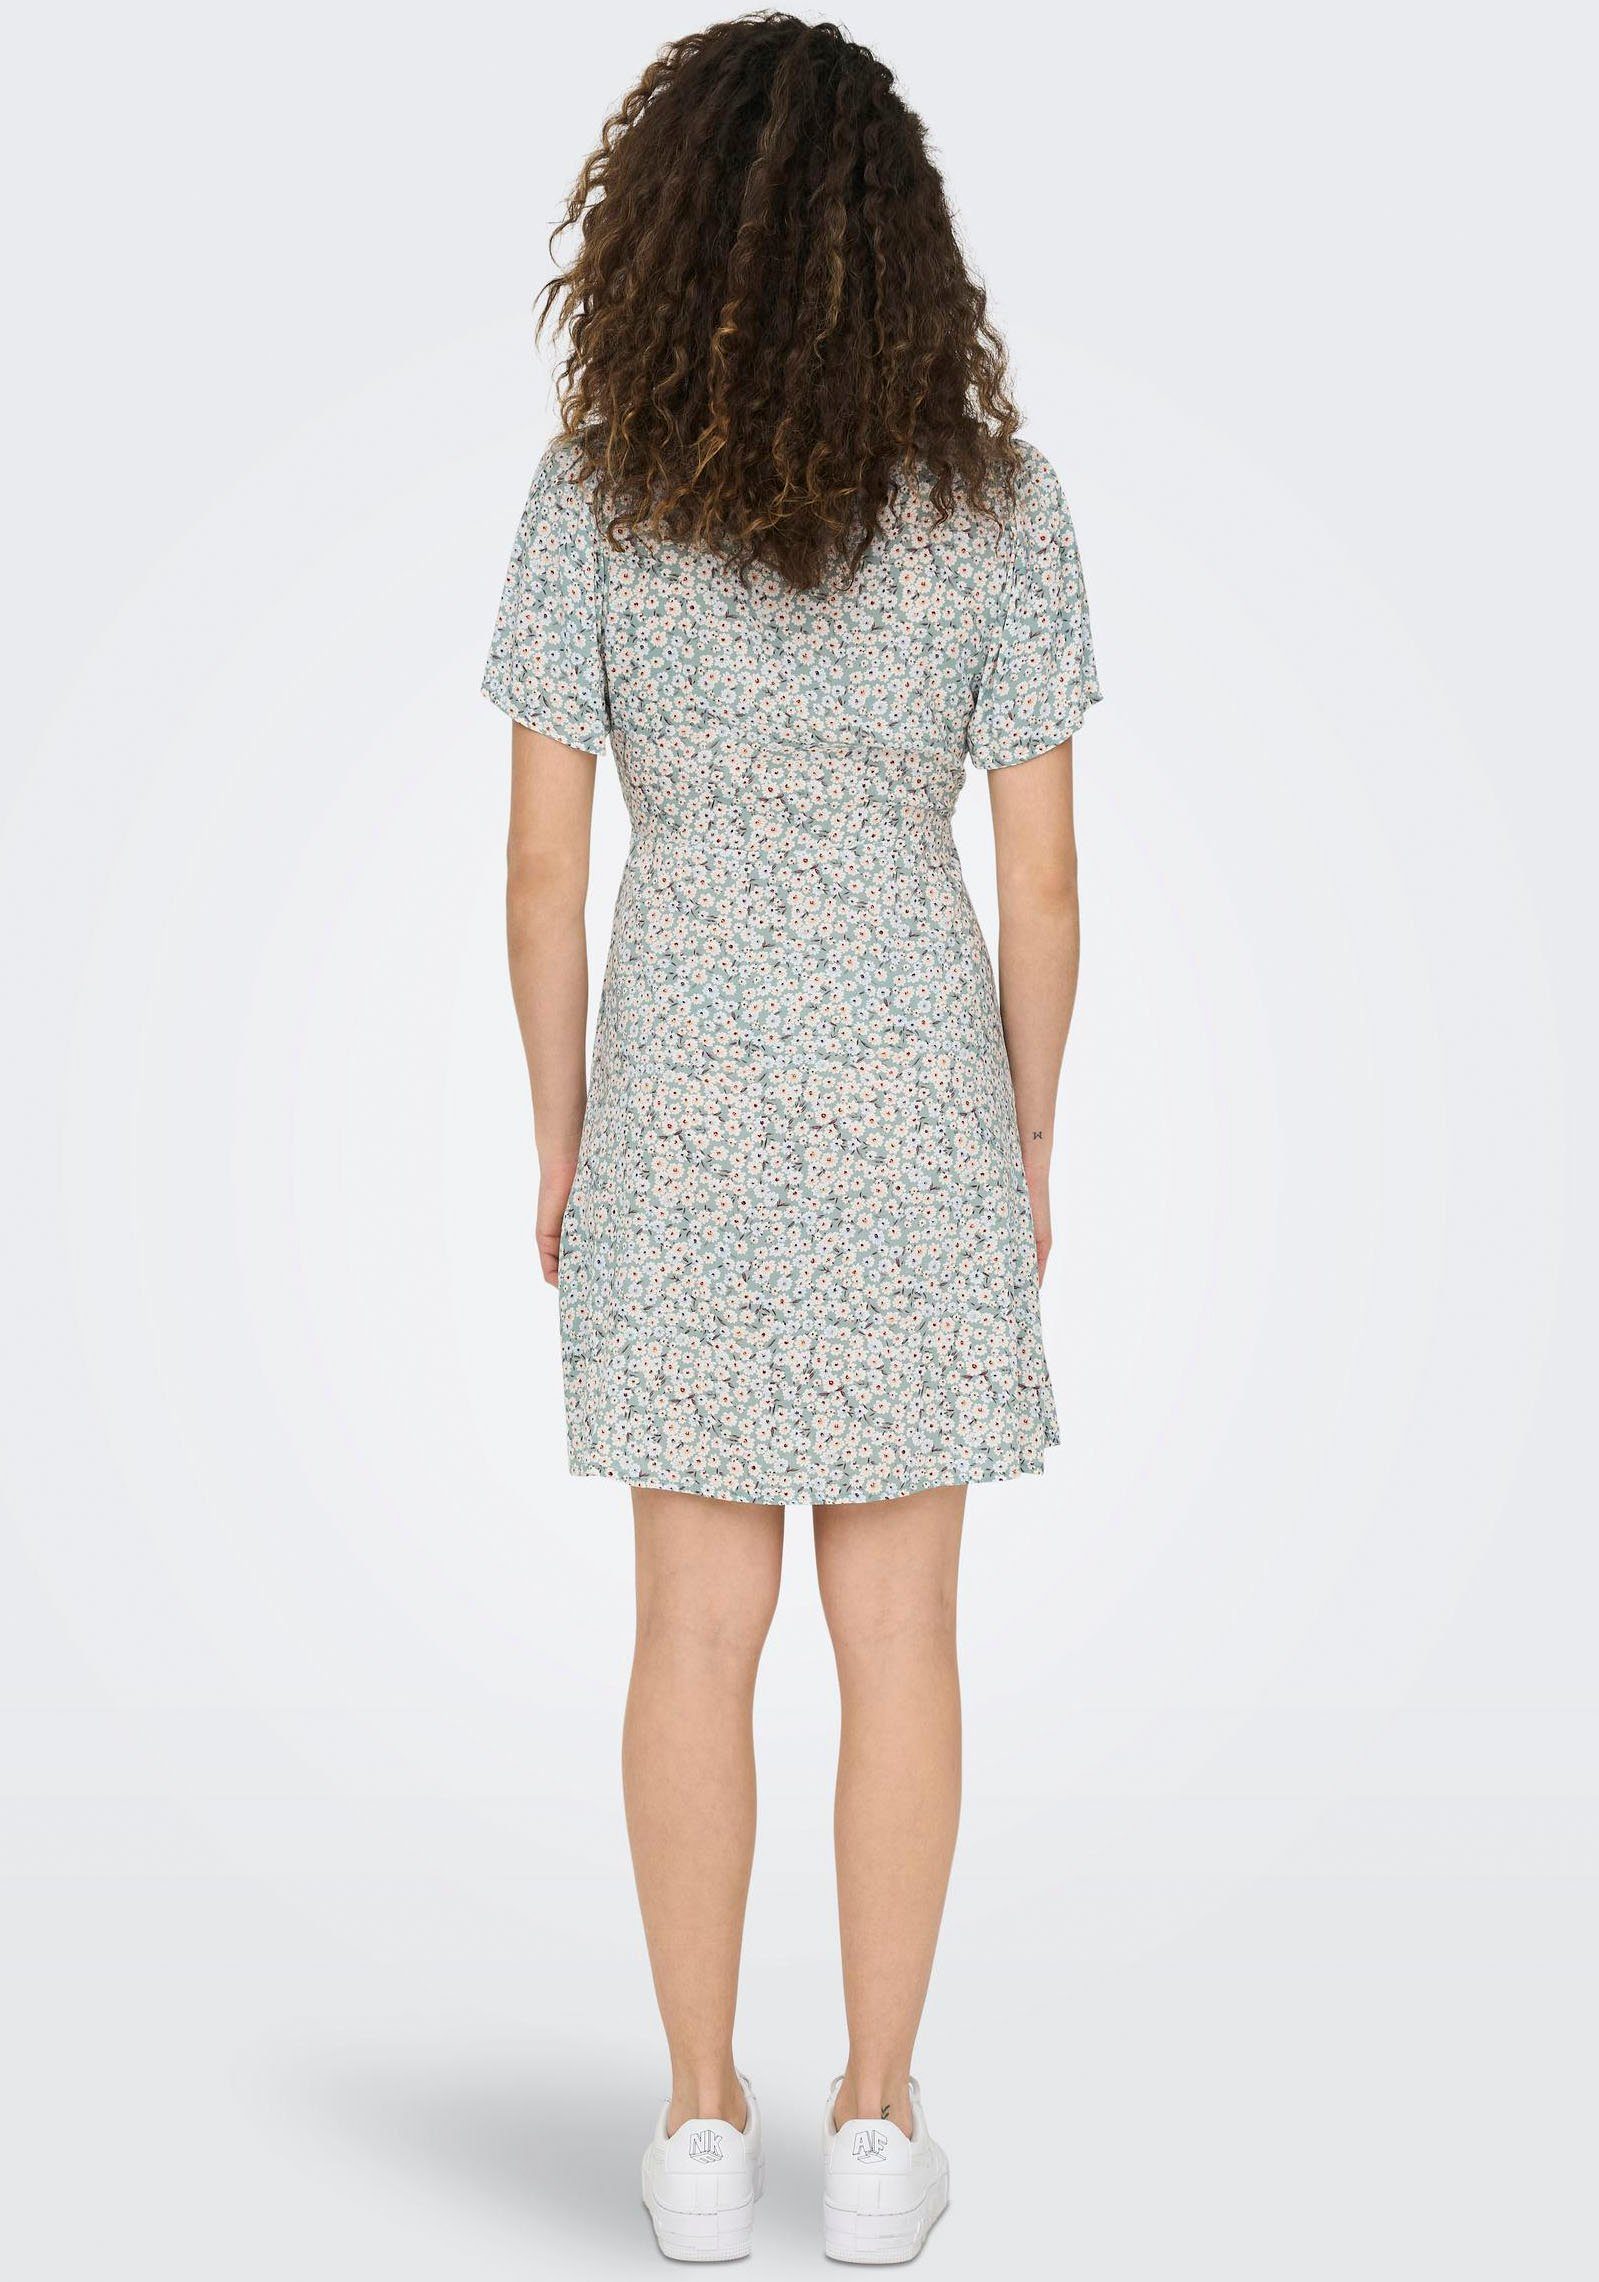 S/S NOOS Gray ONLY SHORT ONLEVIDA Minikleid Mist AOP:FLOWER WVN DRESS